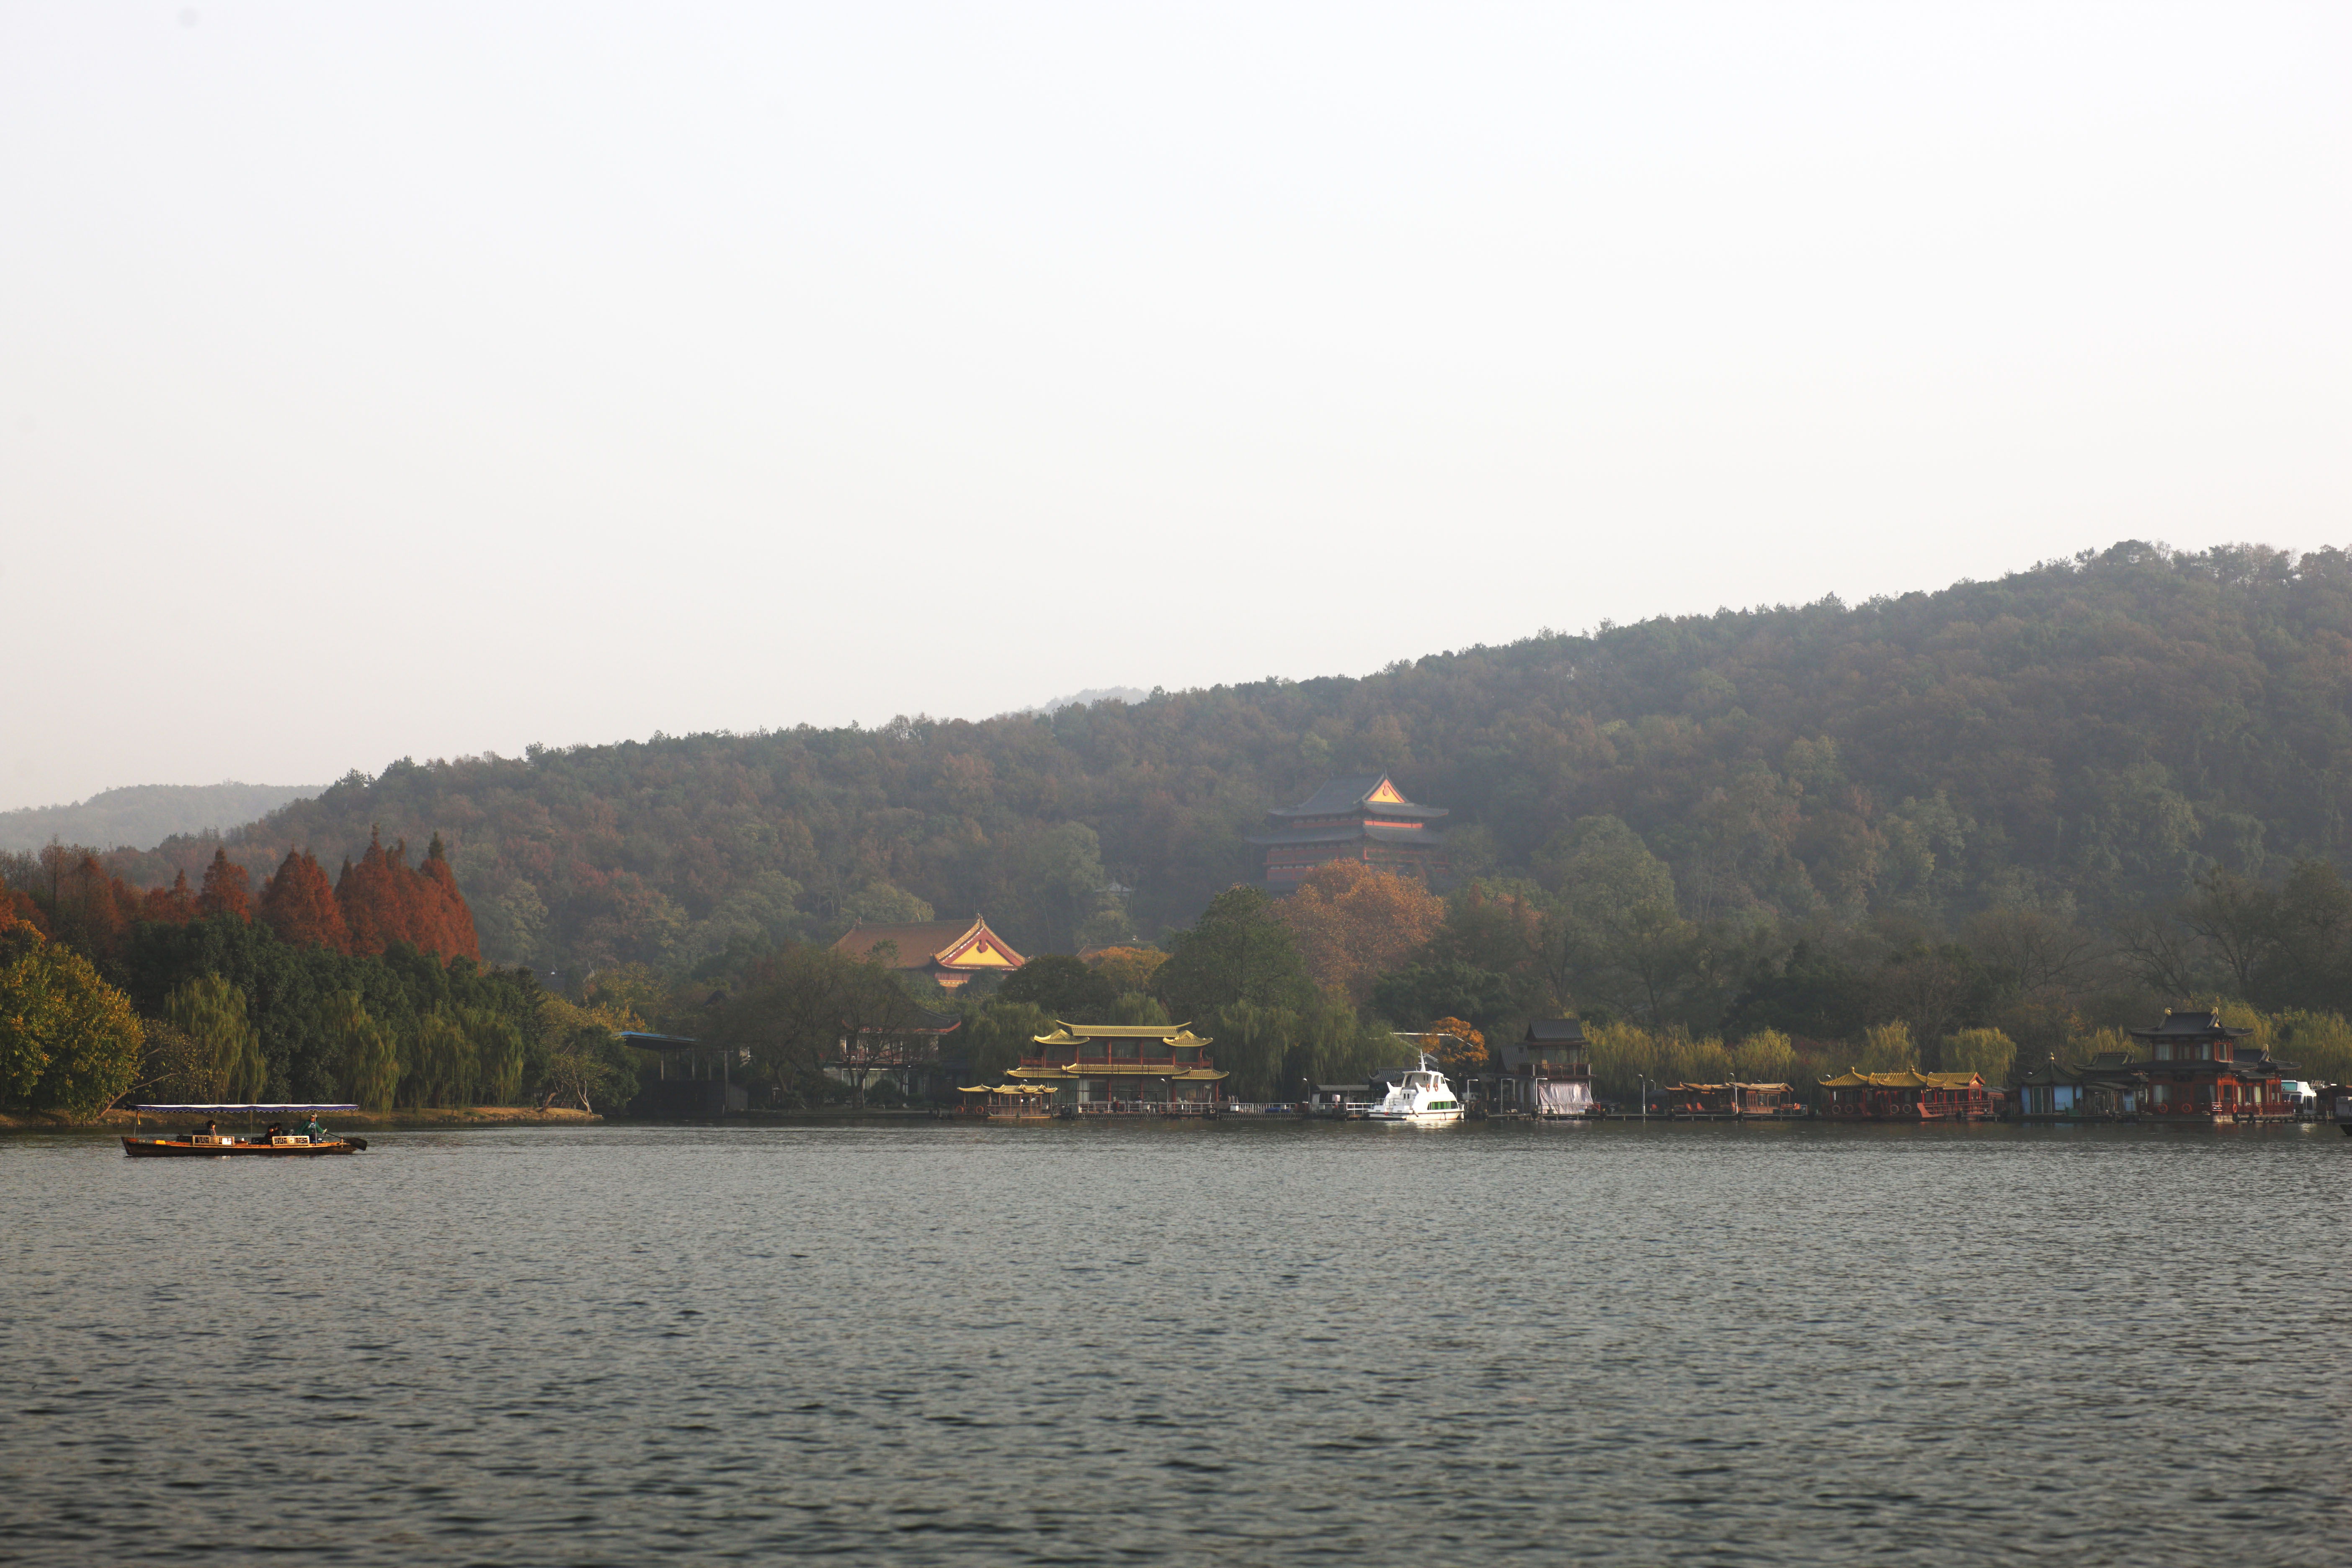 photo,material,free,landscape,picture,stock photo,Creative Commons,Xi-hu lake, ship, Saiko, , Colored leaves